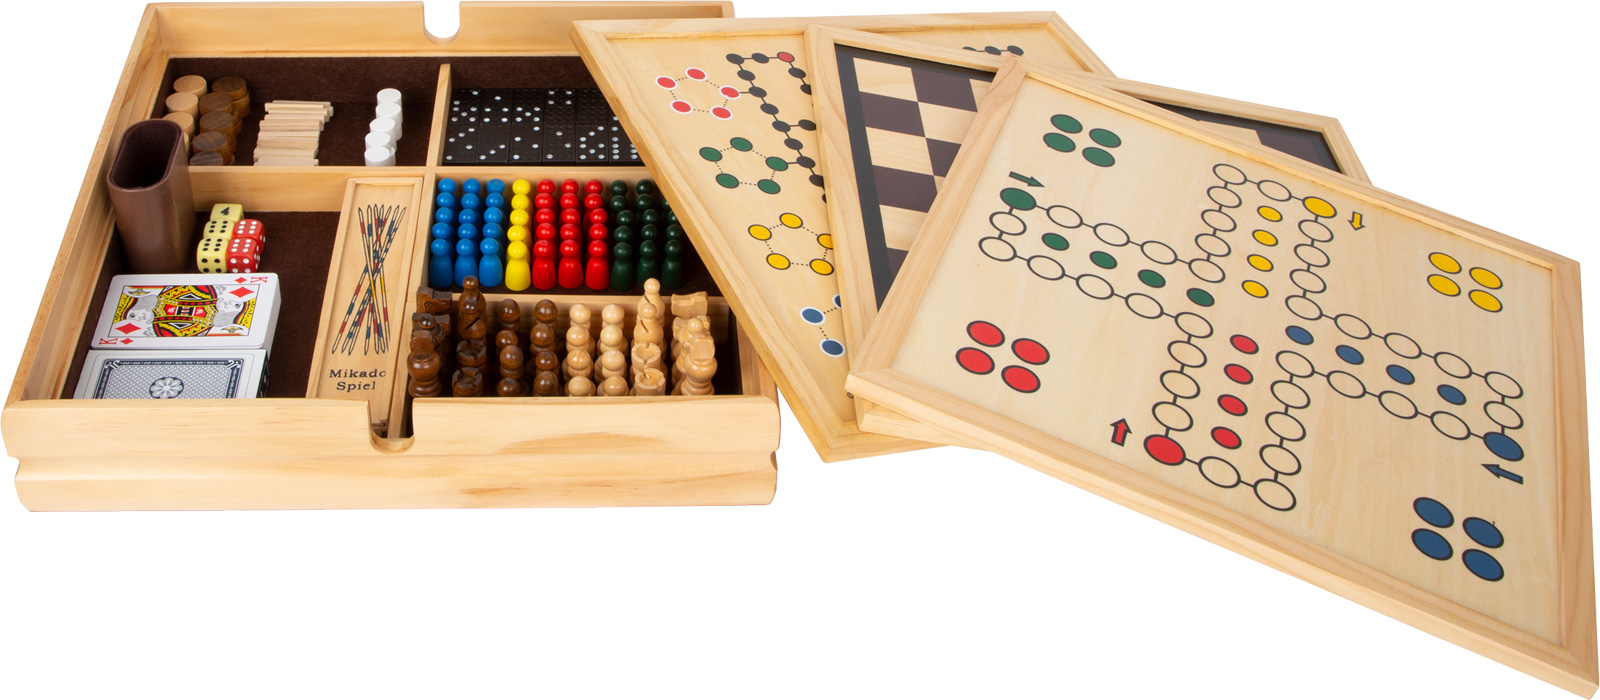 Mikado Game in Wooden Box, Small